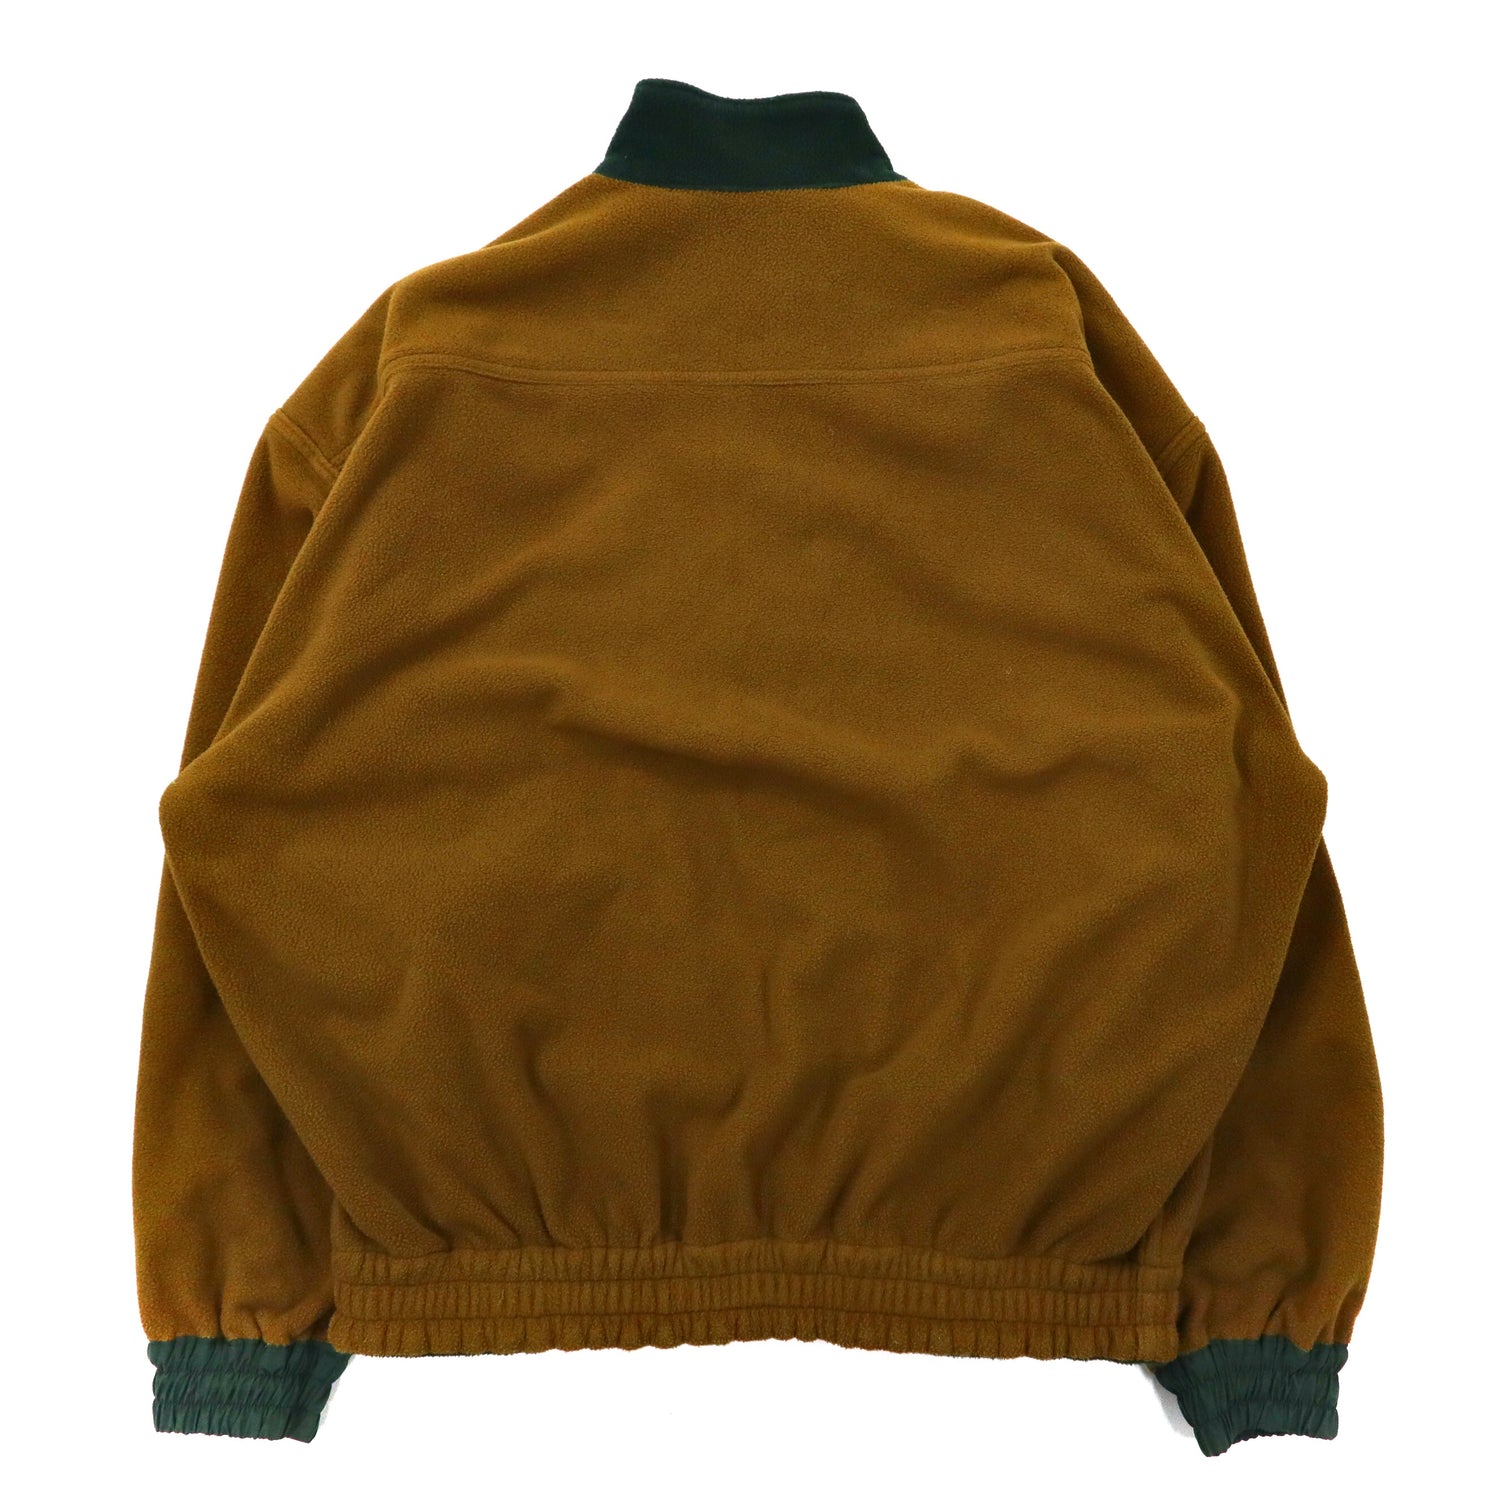 DUNHILL SPORT Nylon Switching Fleece Jacket Reversible L Green 